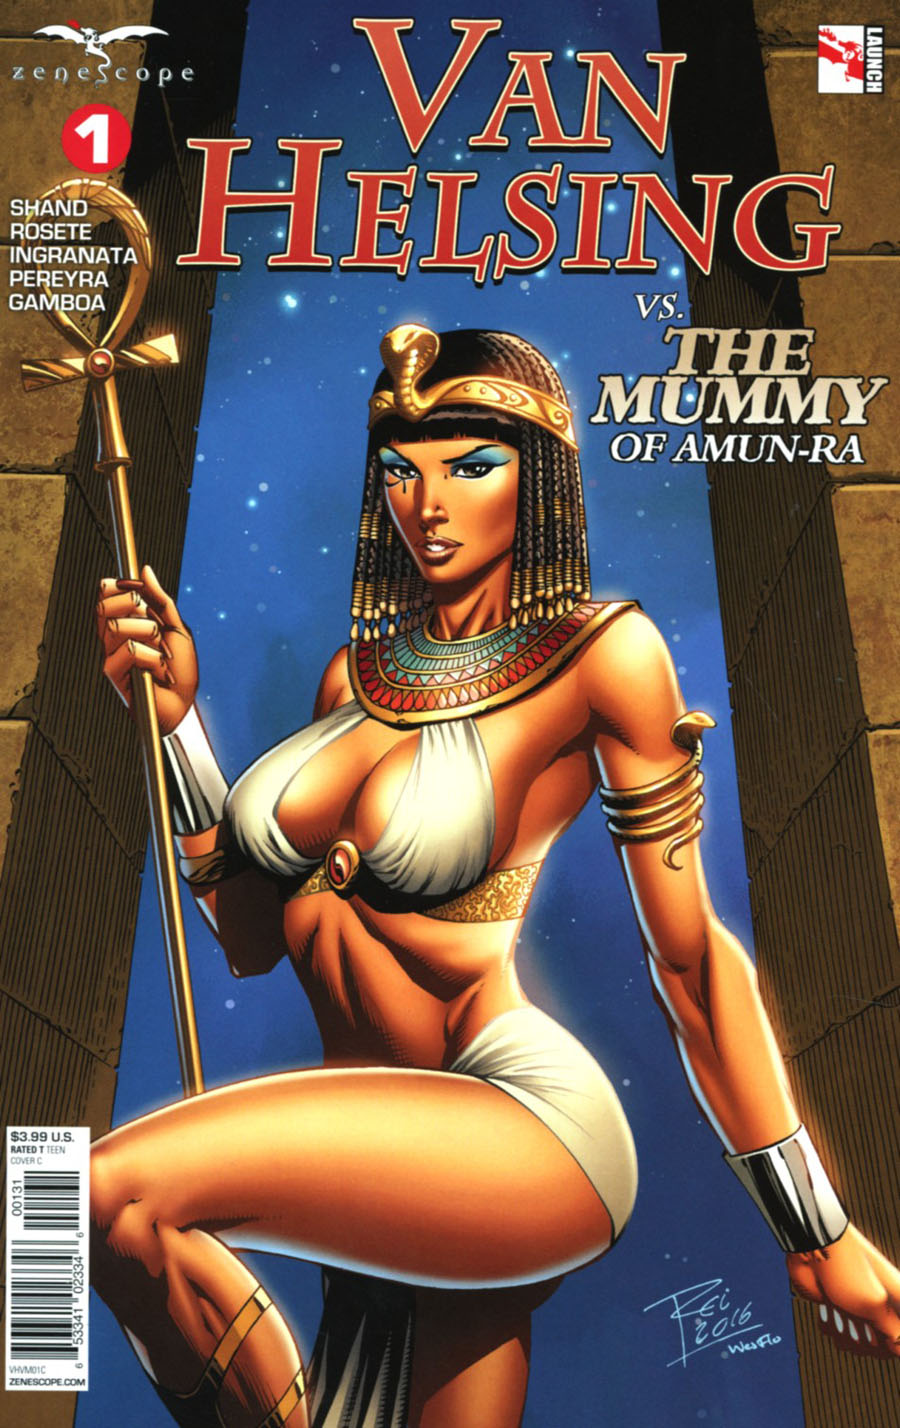 Grimm Fairy Tales Presents Van Helsing vs The Mummy Of Amun-Ra #1 Cover C Renato Rei